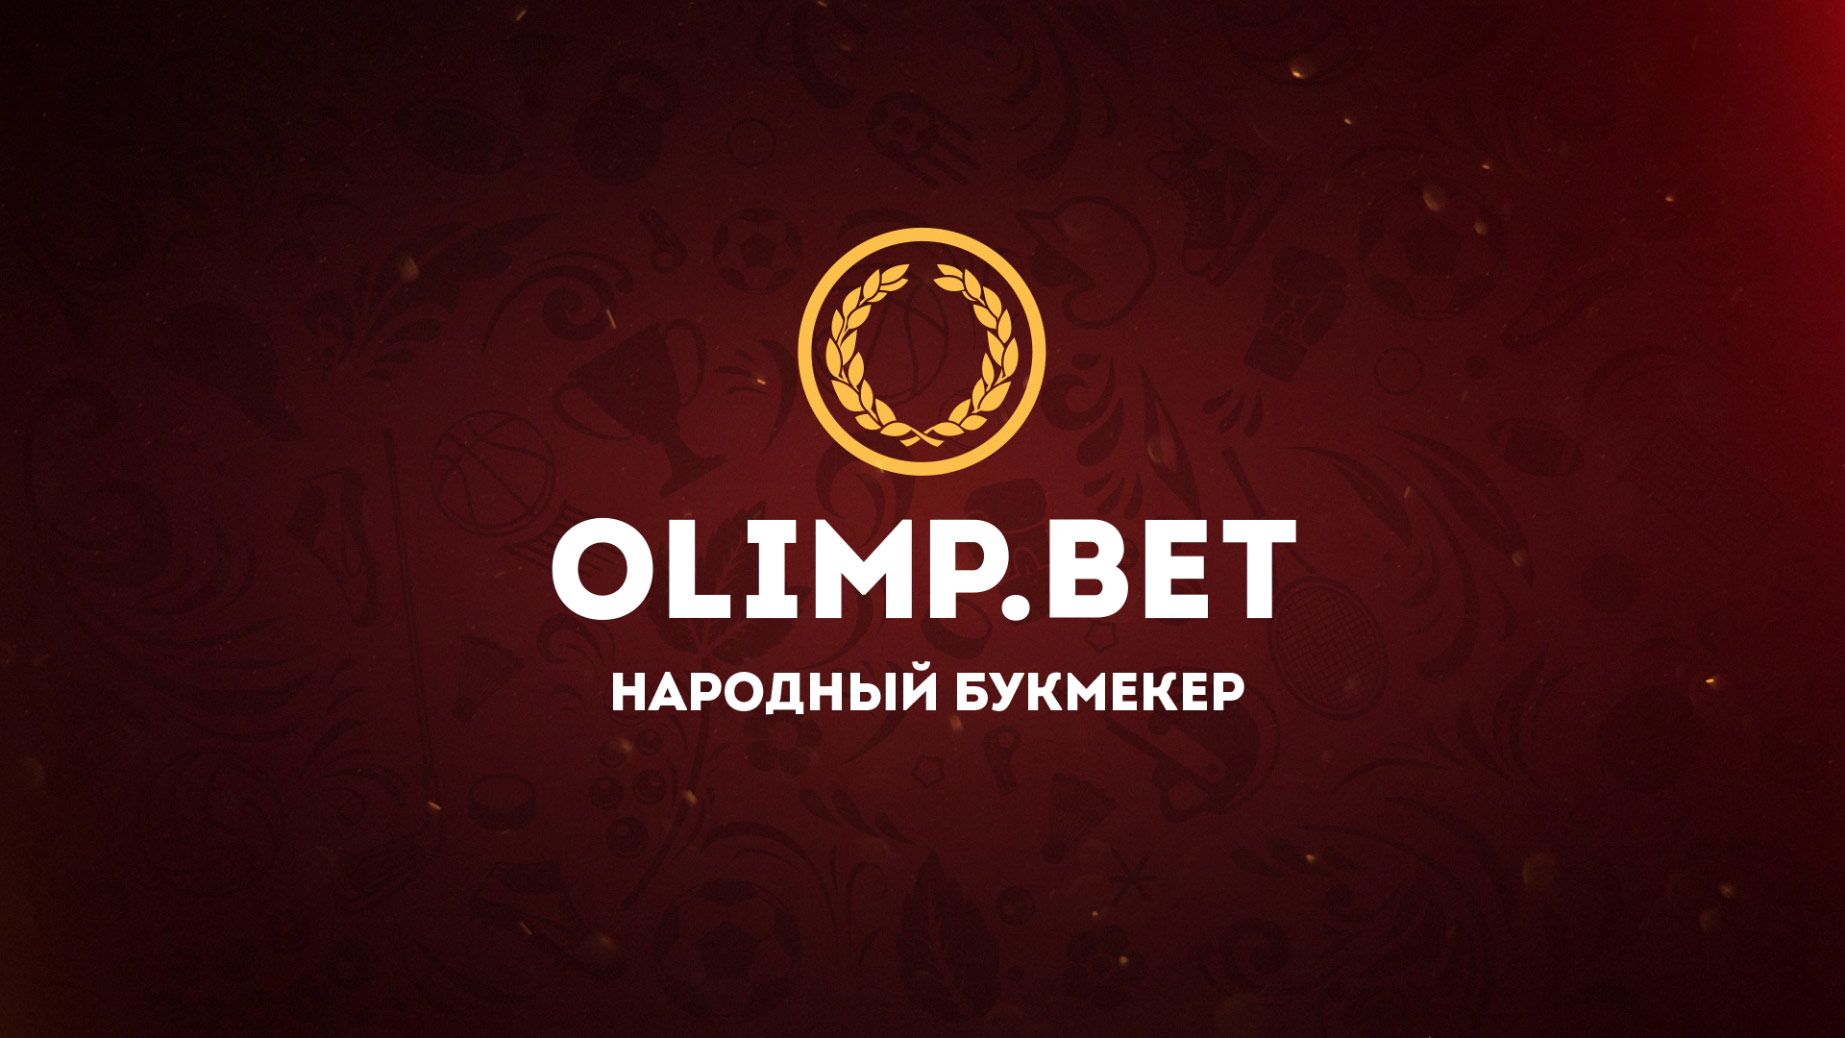 Olimpbet стал официальным спонсором «Шахтёра» из Караганды